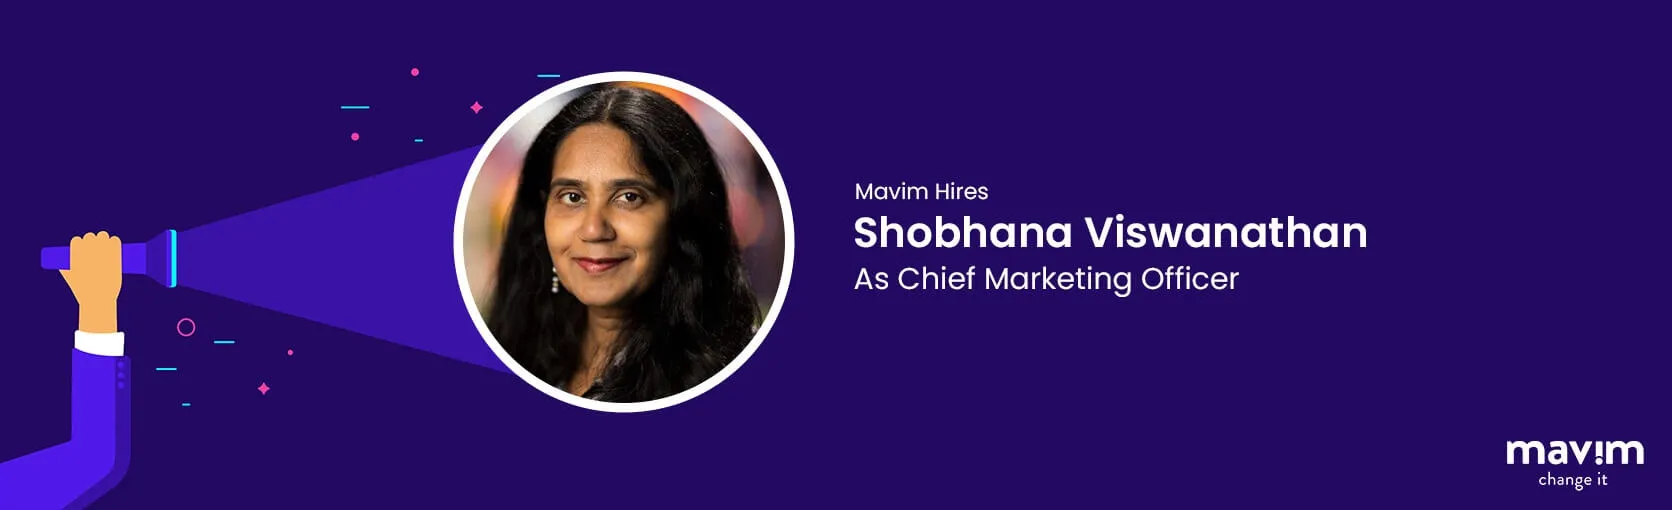 Mavim Hires Shobhana Viswanathan As Chief Marketing Officer, As Company Continues To Build Out Expansive Global Vision